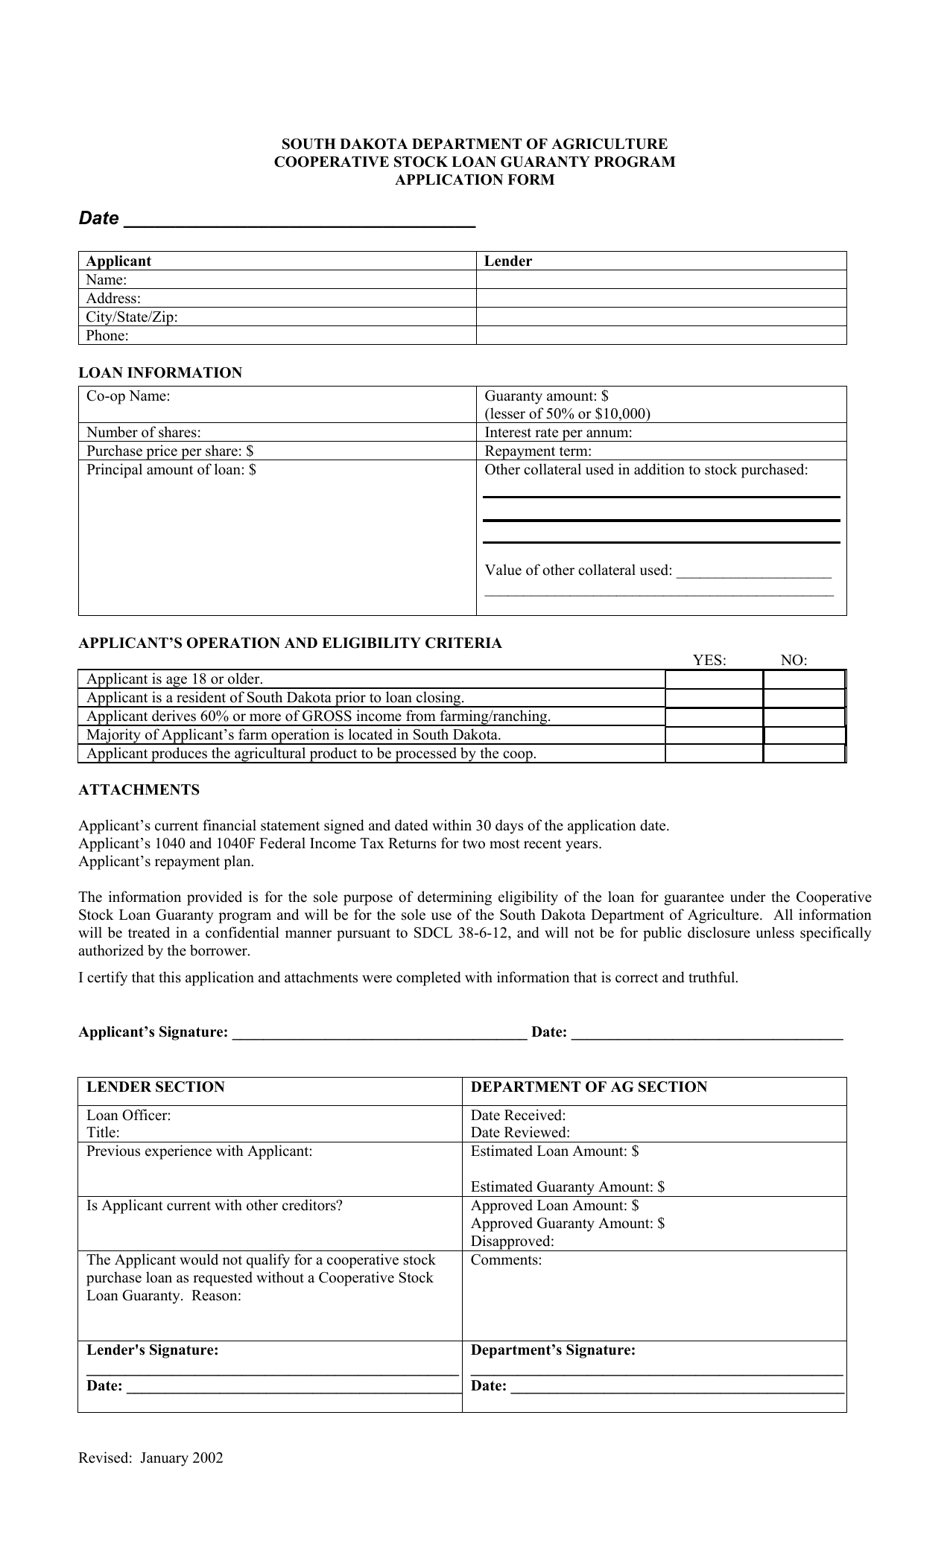 Cooperative Stock Loan Guaranty Program Application Form - South Dakota, Page 1